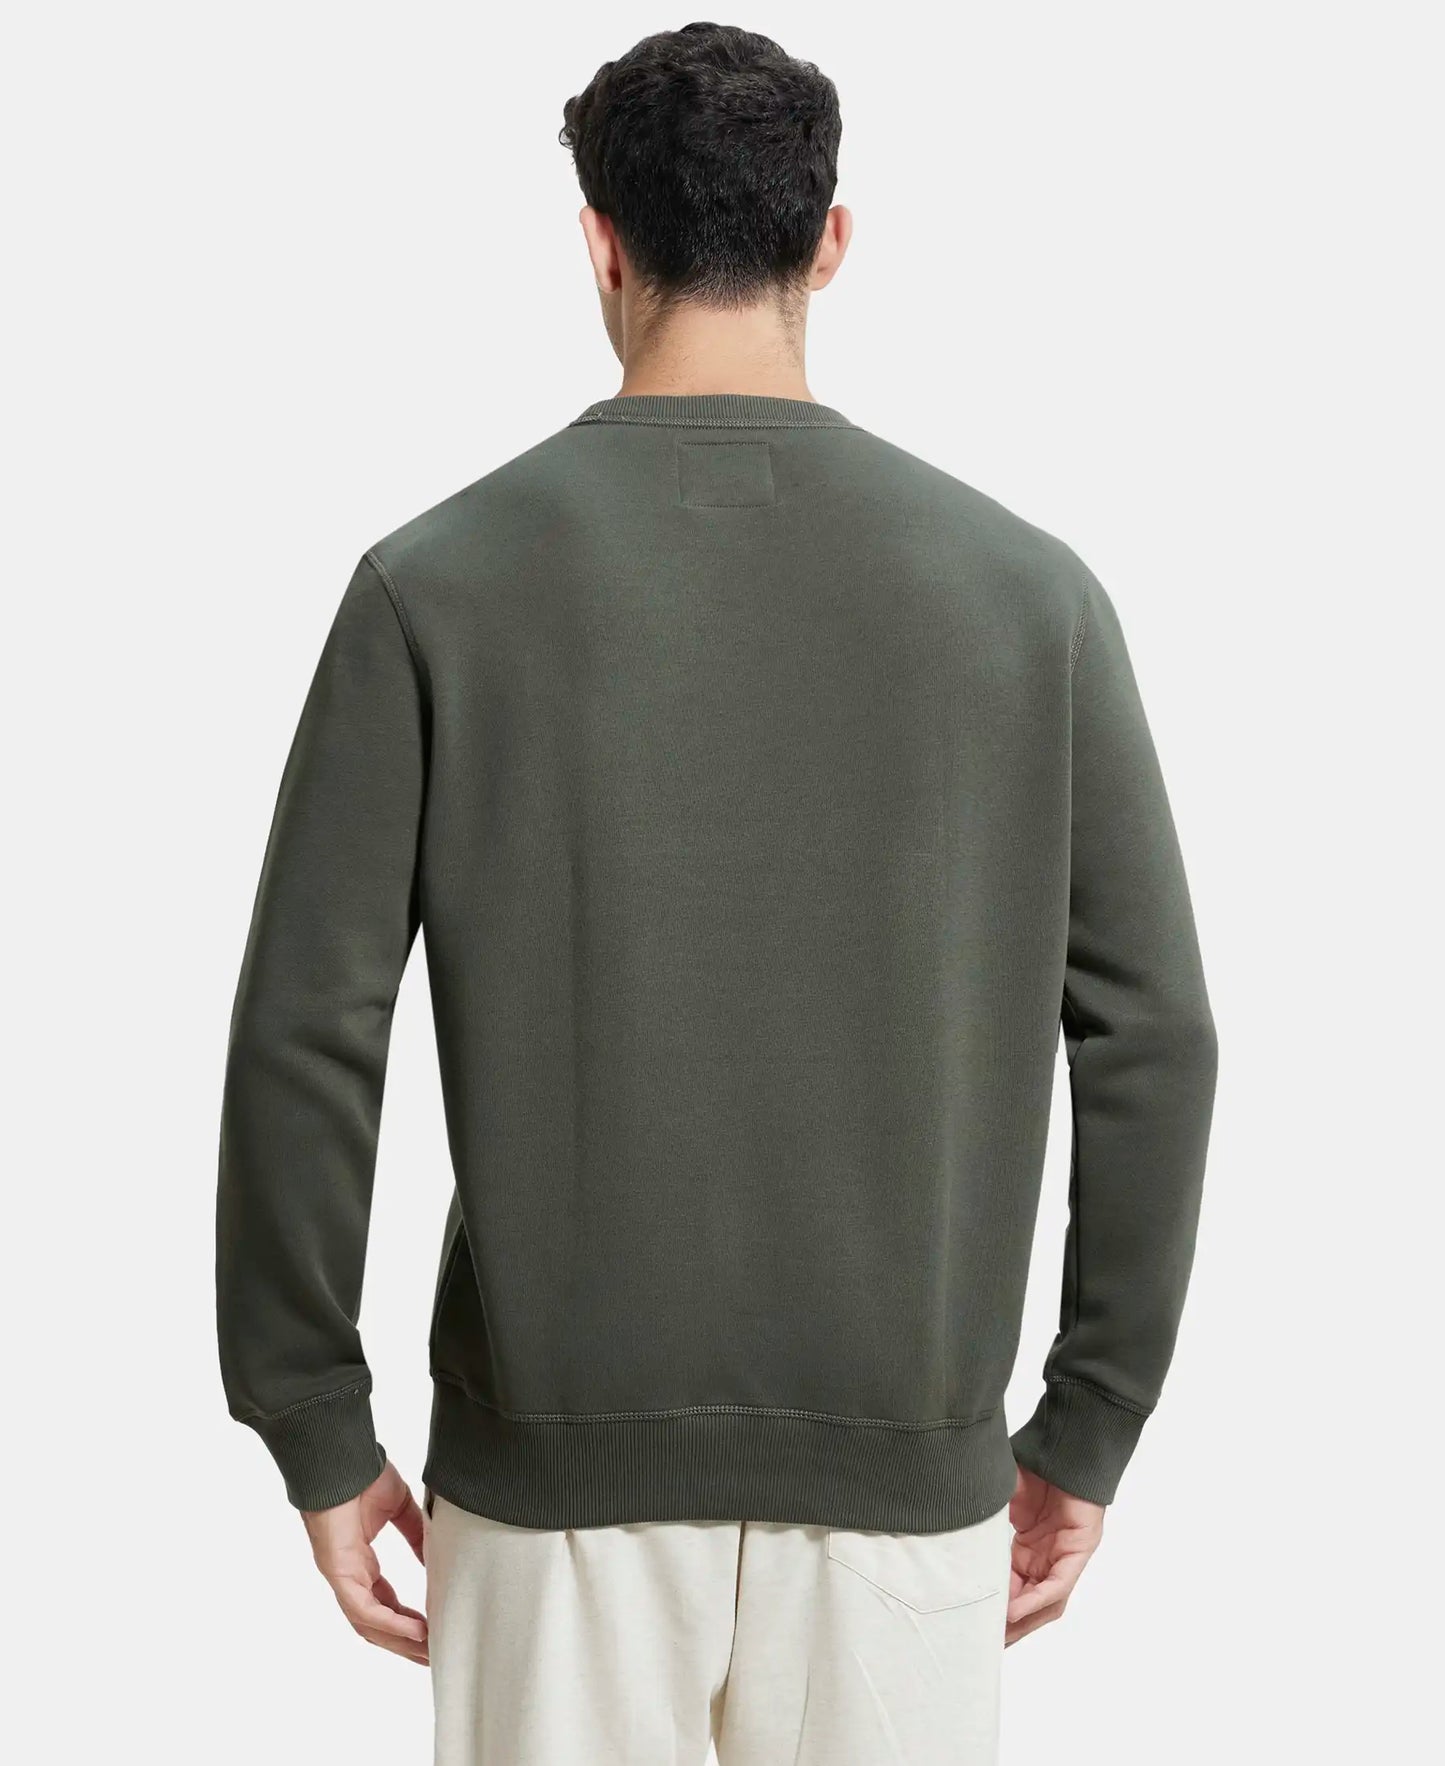 Super Combed Cotton Rich Fleece Sweatshirt with StayWarm Technology - Deep Olive-3